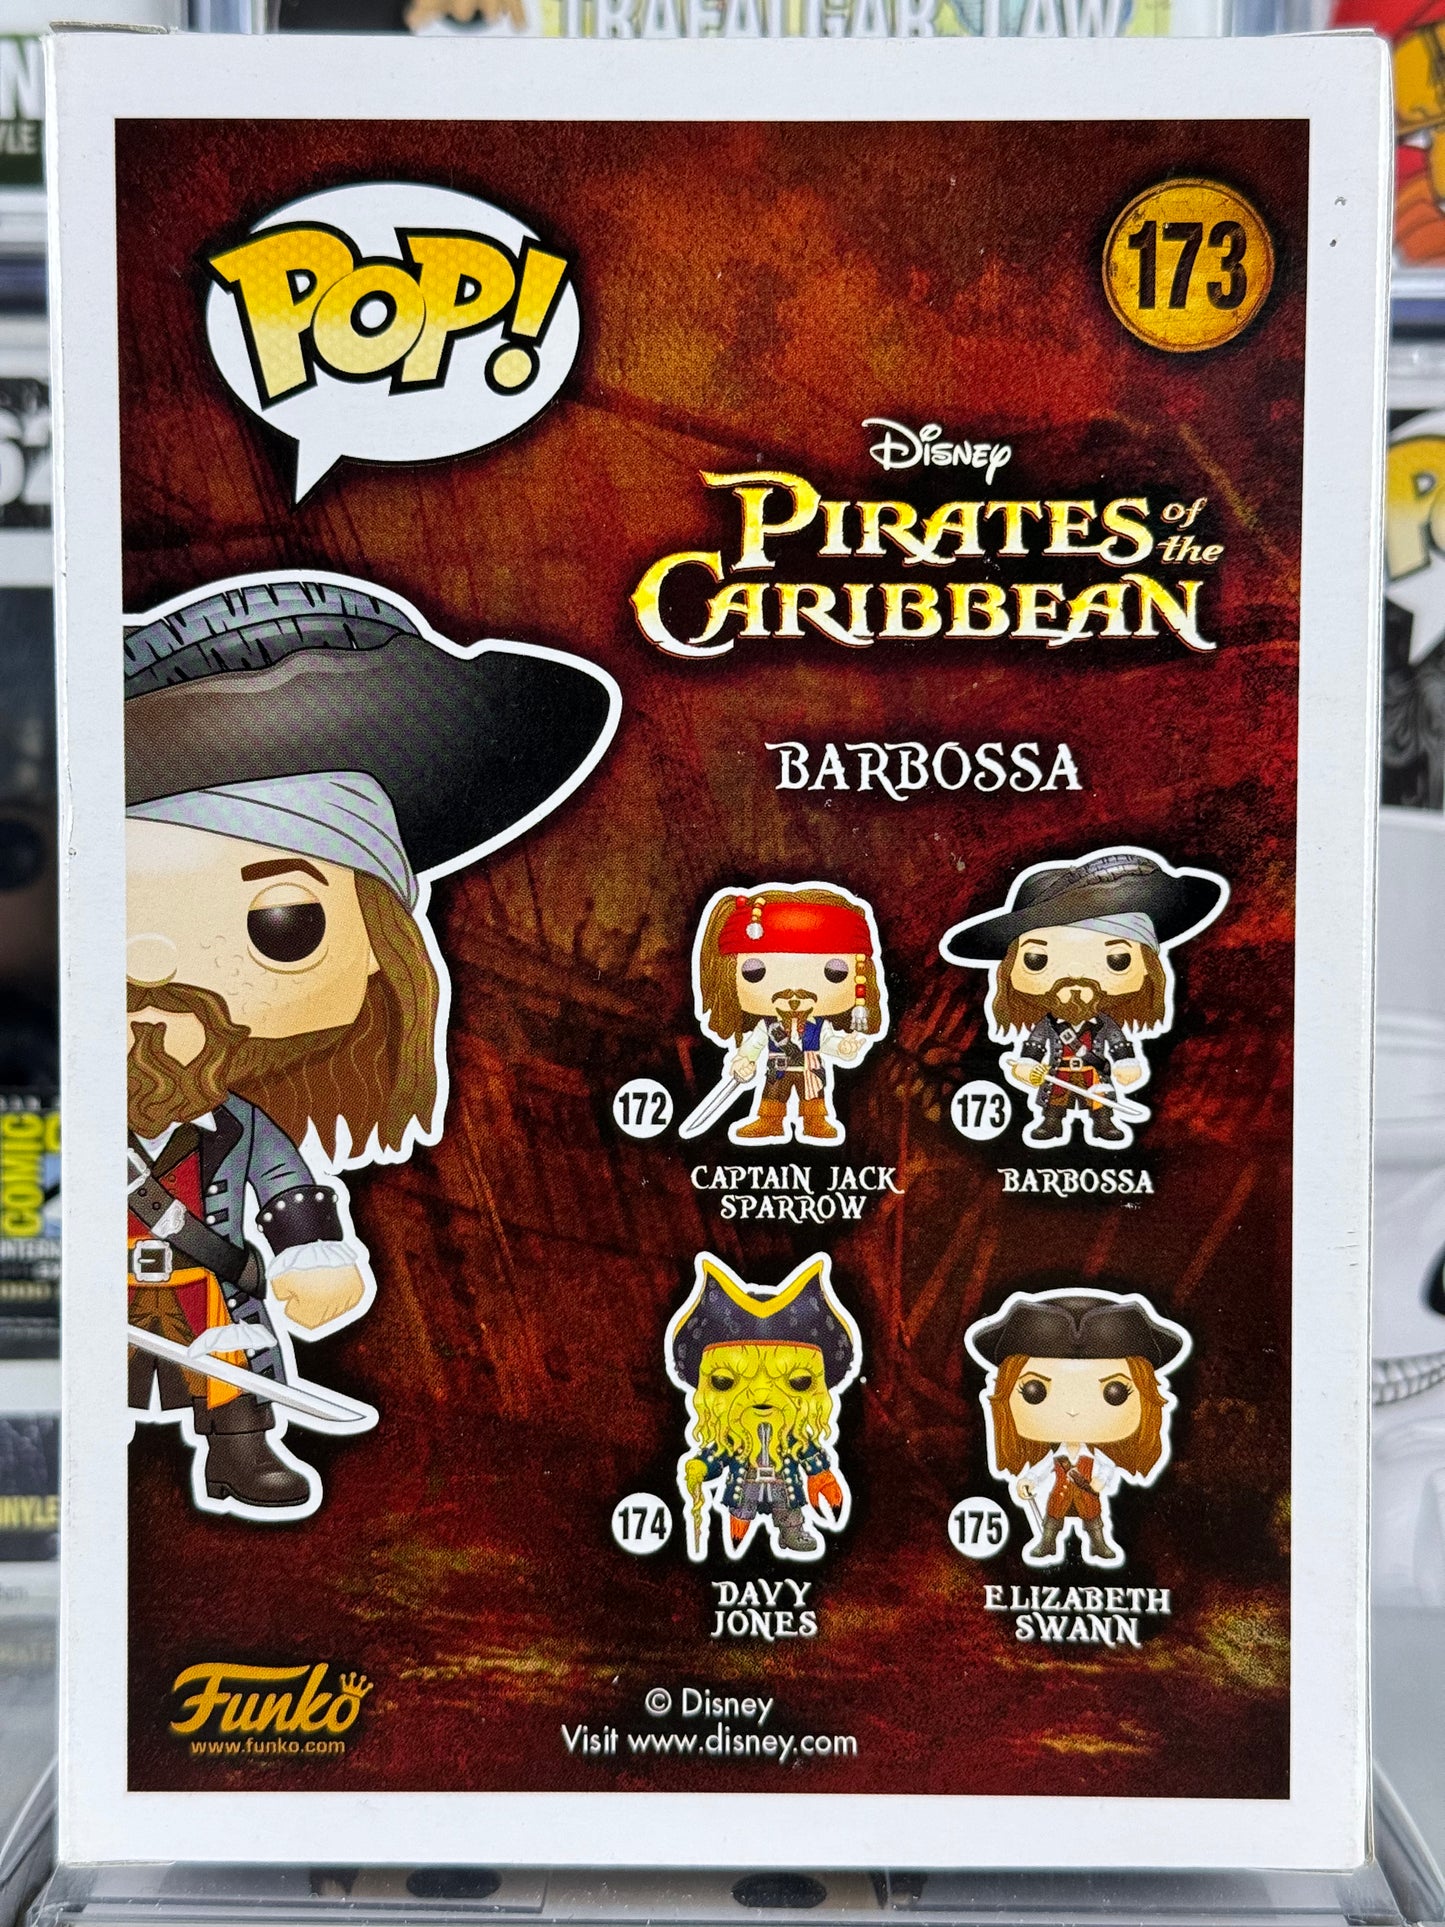 Disney Pirates of the Caribbean - Barbossa (173) Vaulted